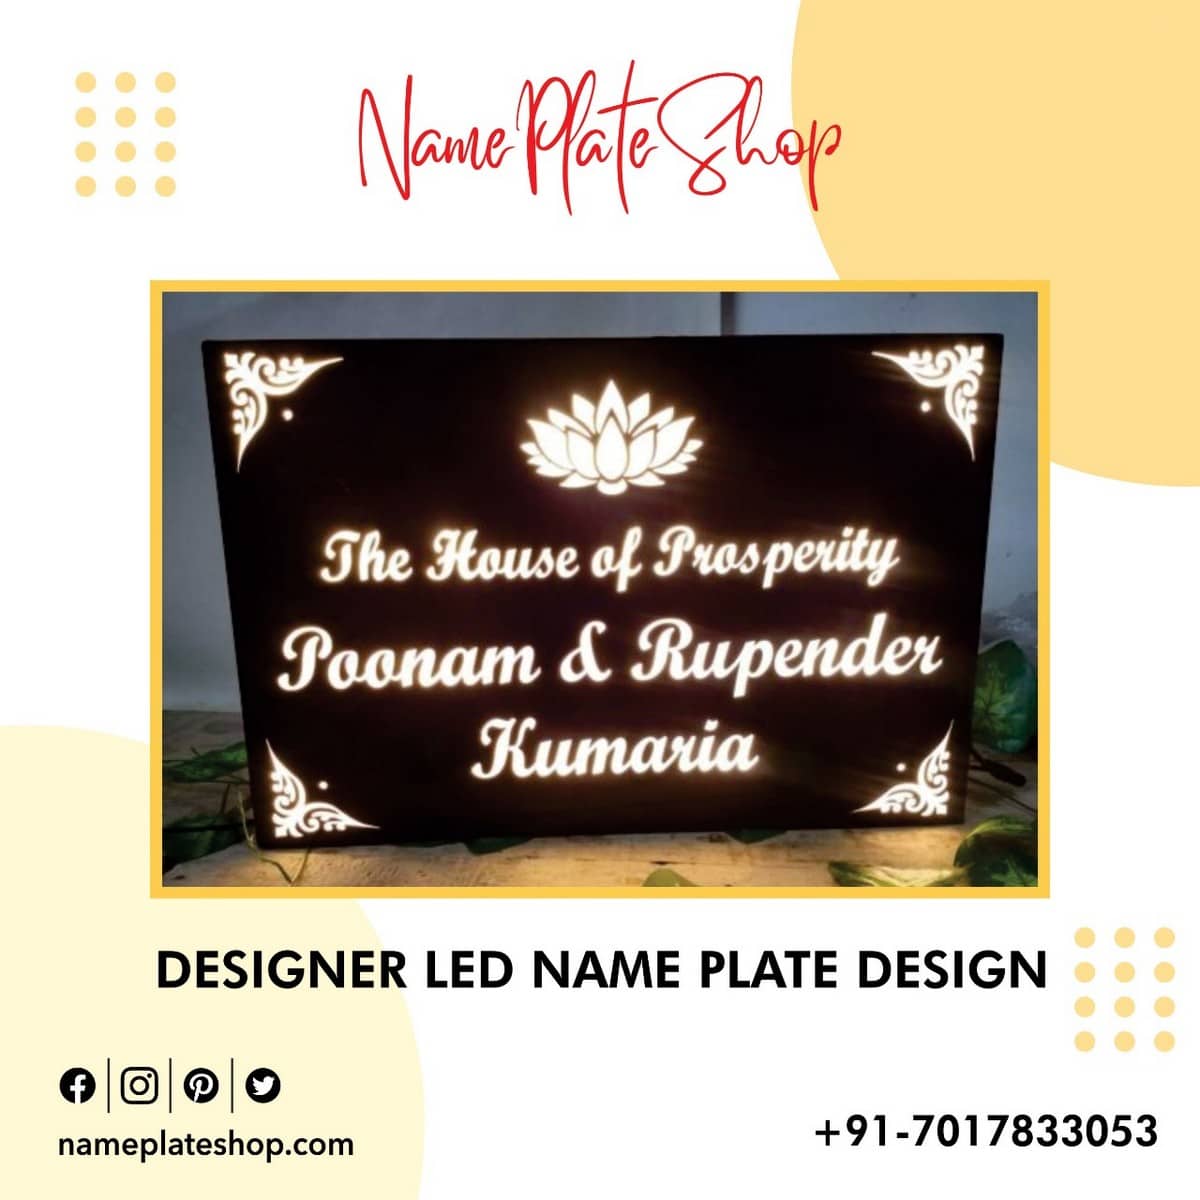 Designer Led Name Plate Design